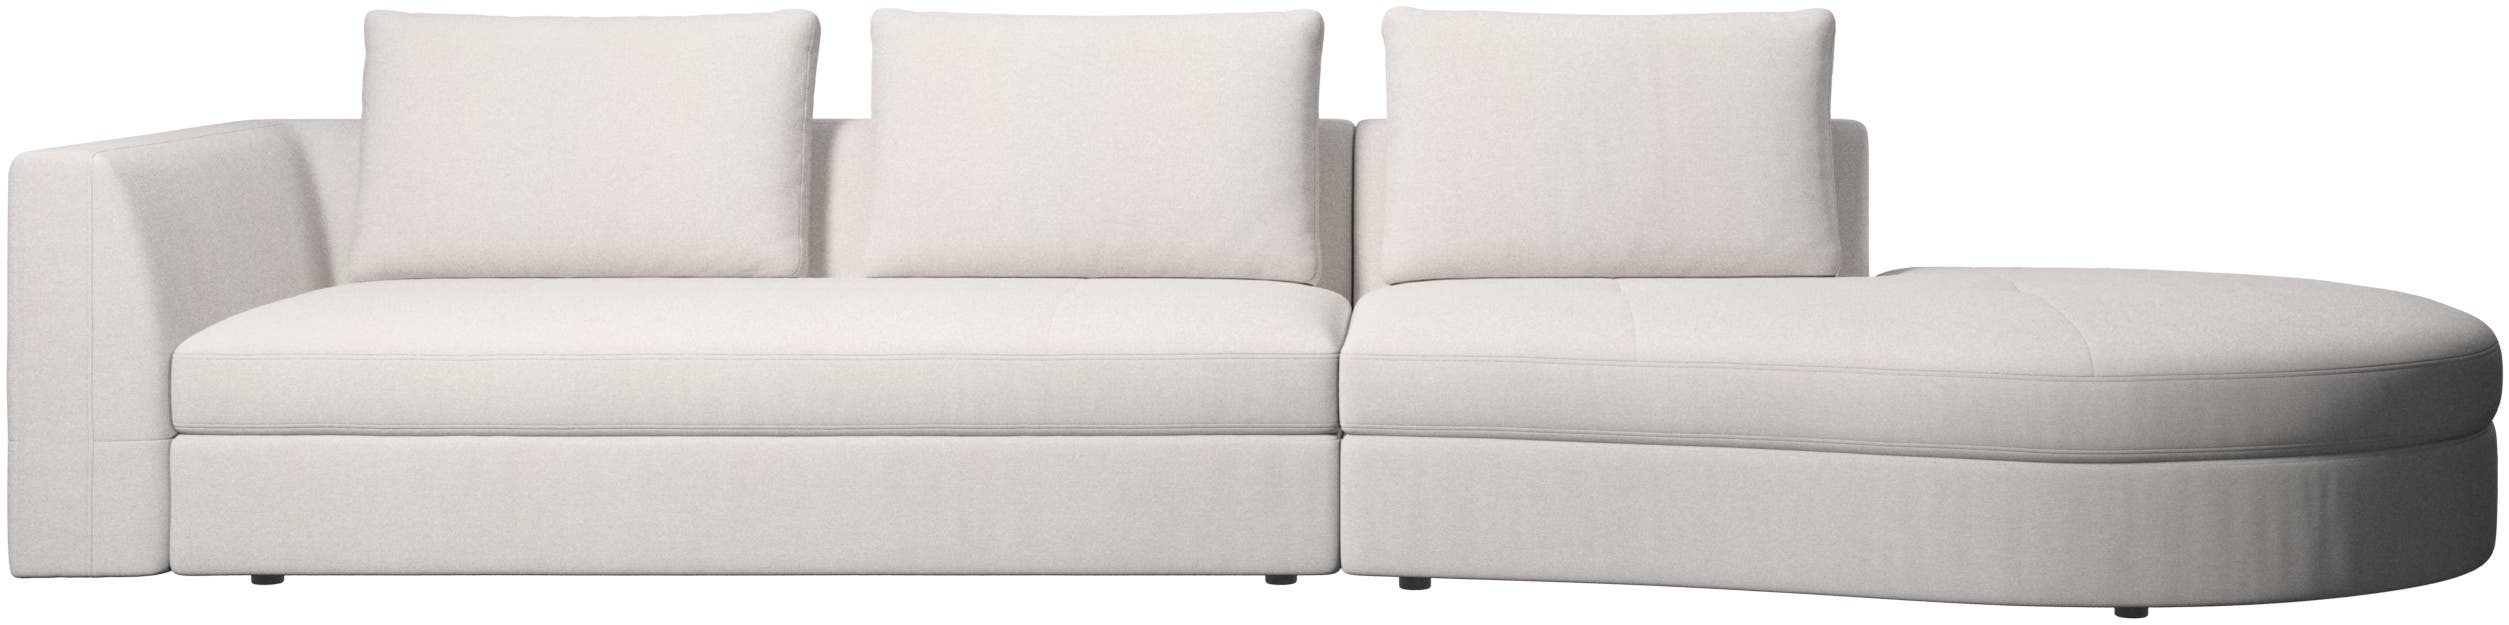 Bergamo sofa with round lounging unit,right